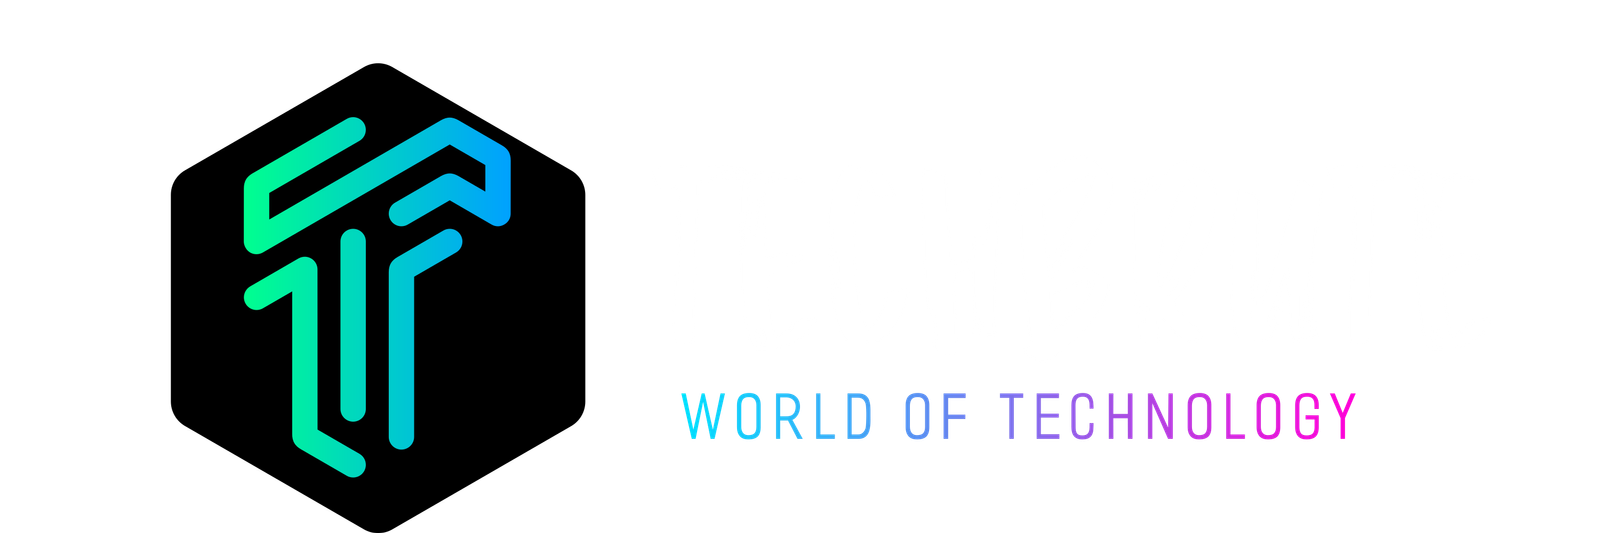 Techbrute World of Technology Logo